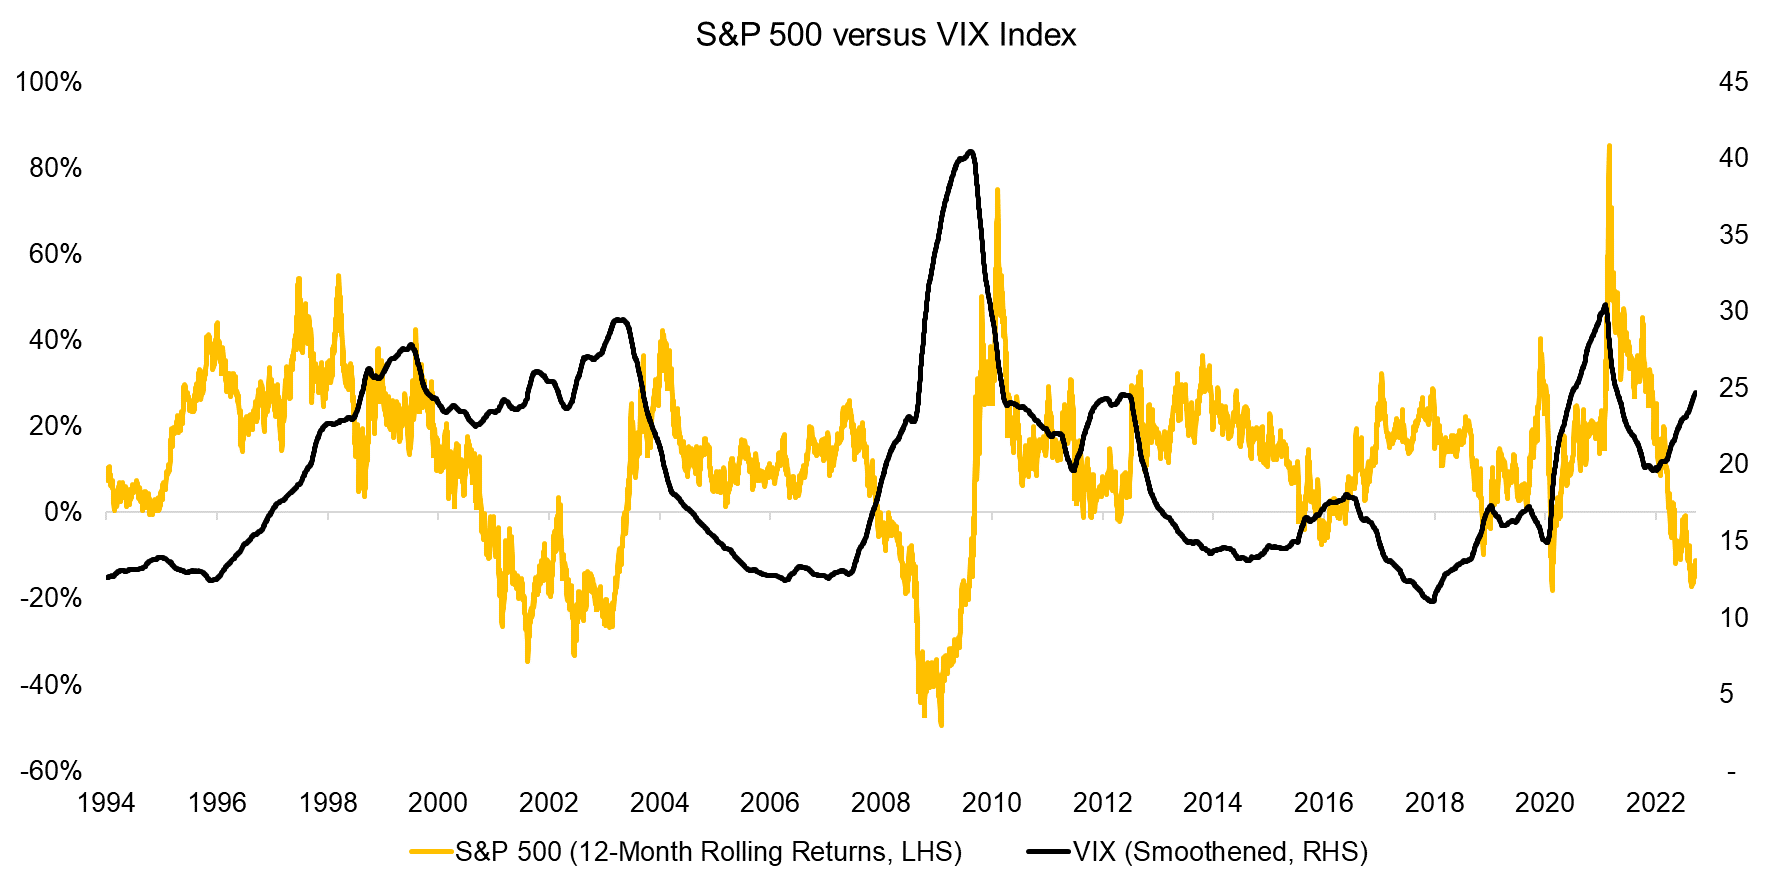 S&P 500 versus VIX Index